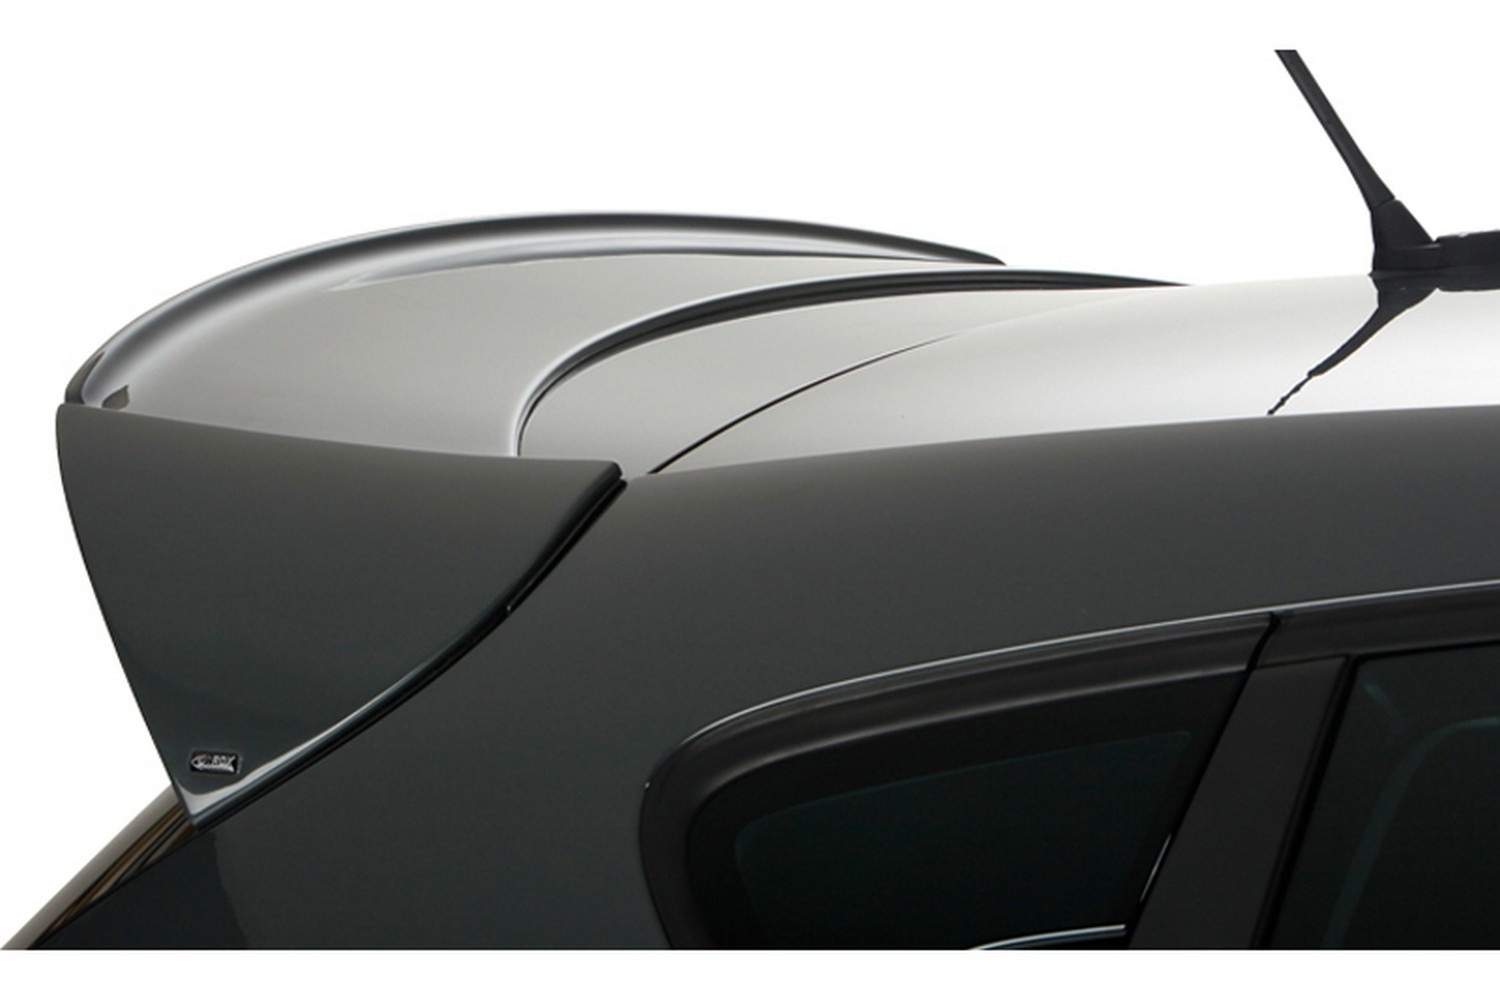 Roof spoiler Seat Leon (1P facelift) PU